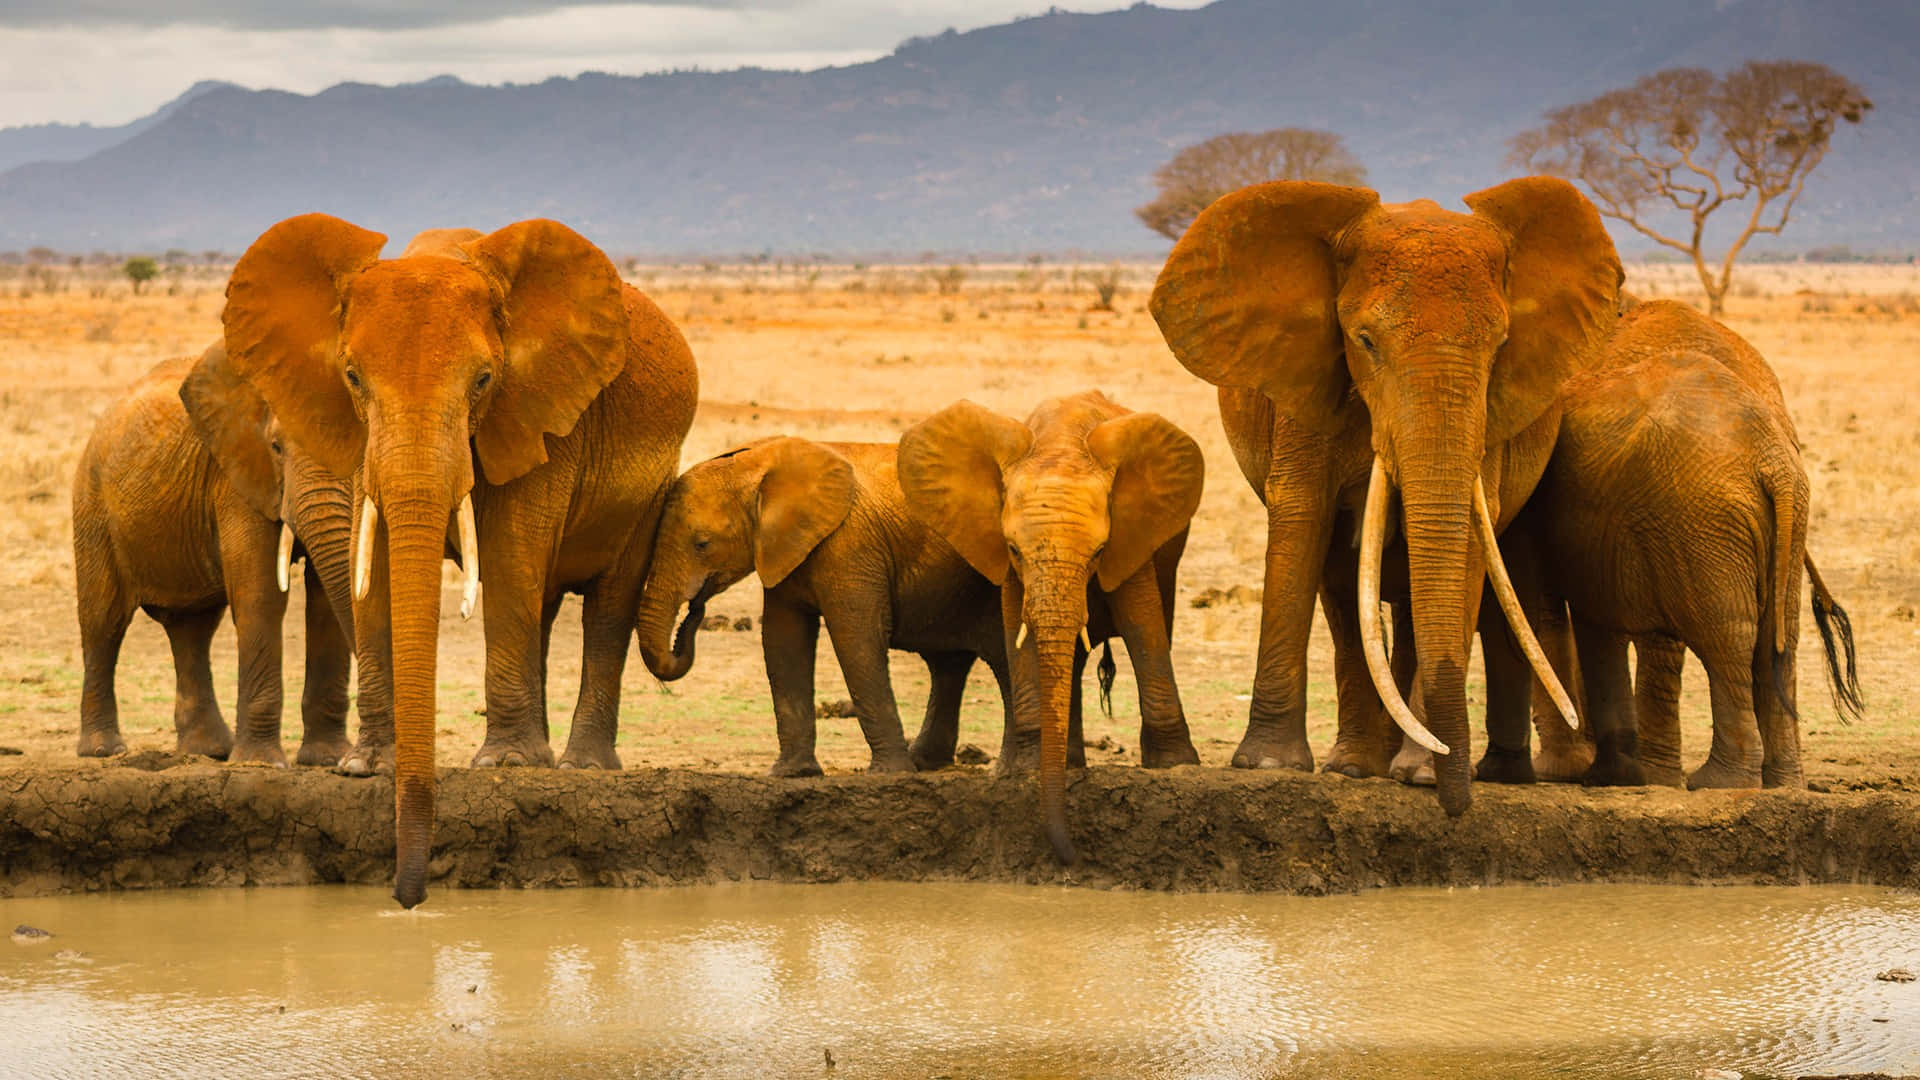 The Serengeti Plains of Tanzania, Africa Wallpaper